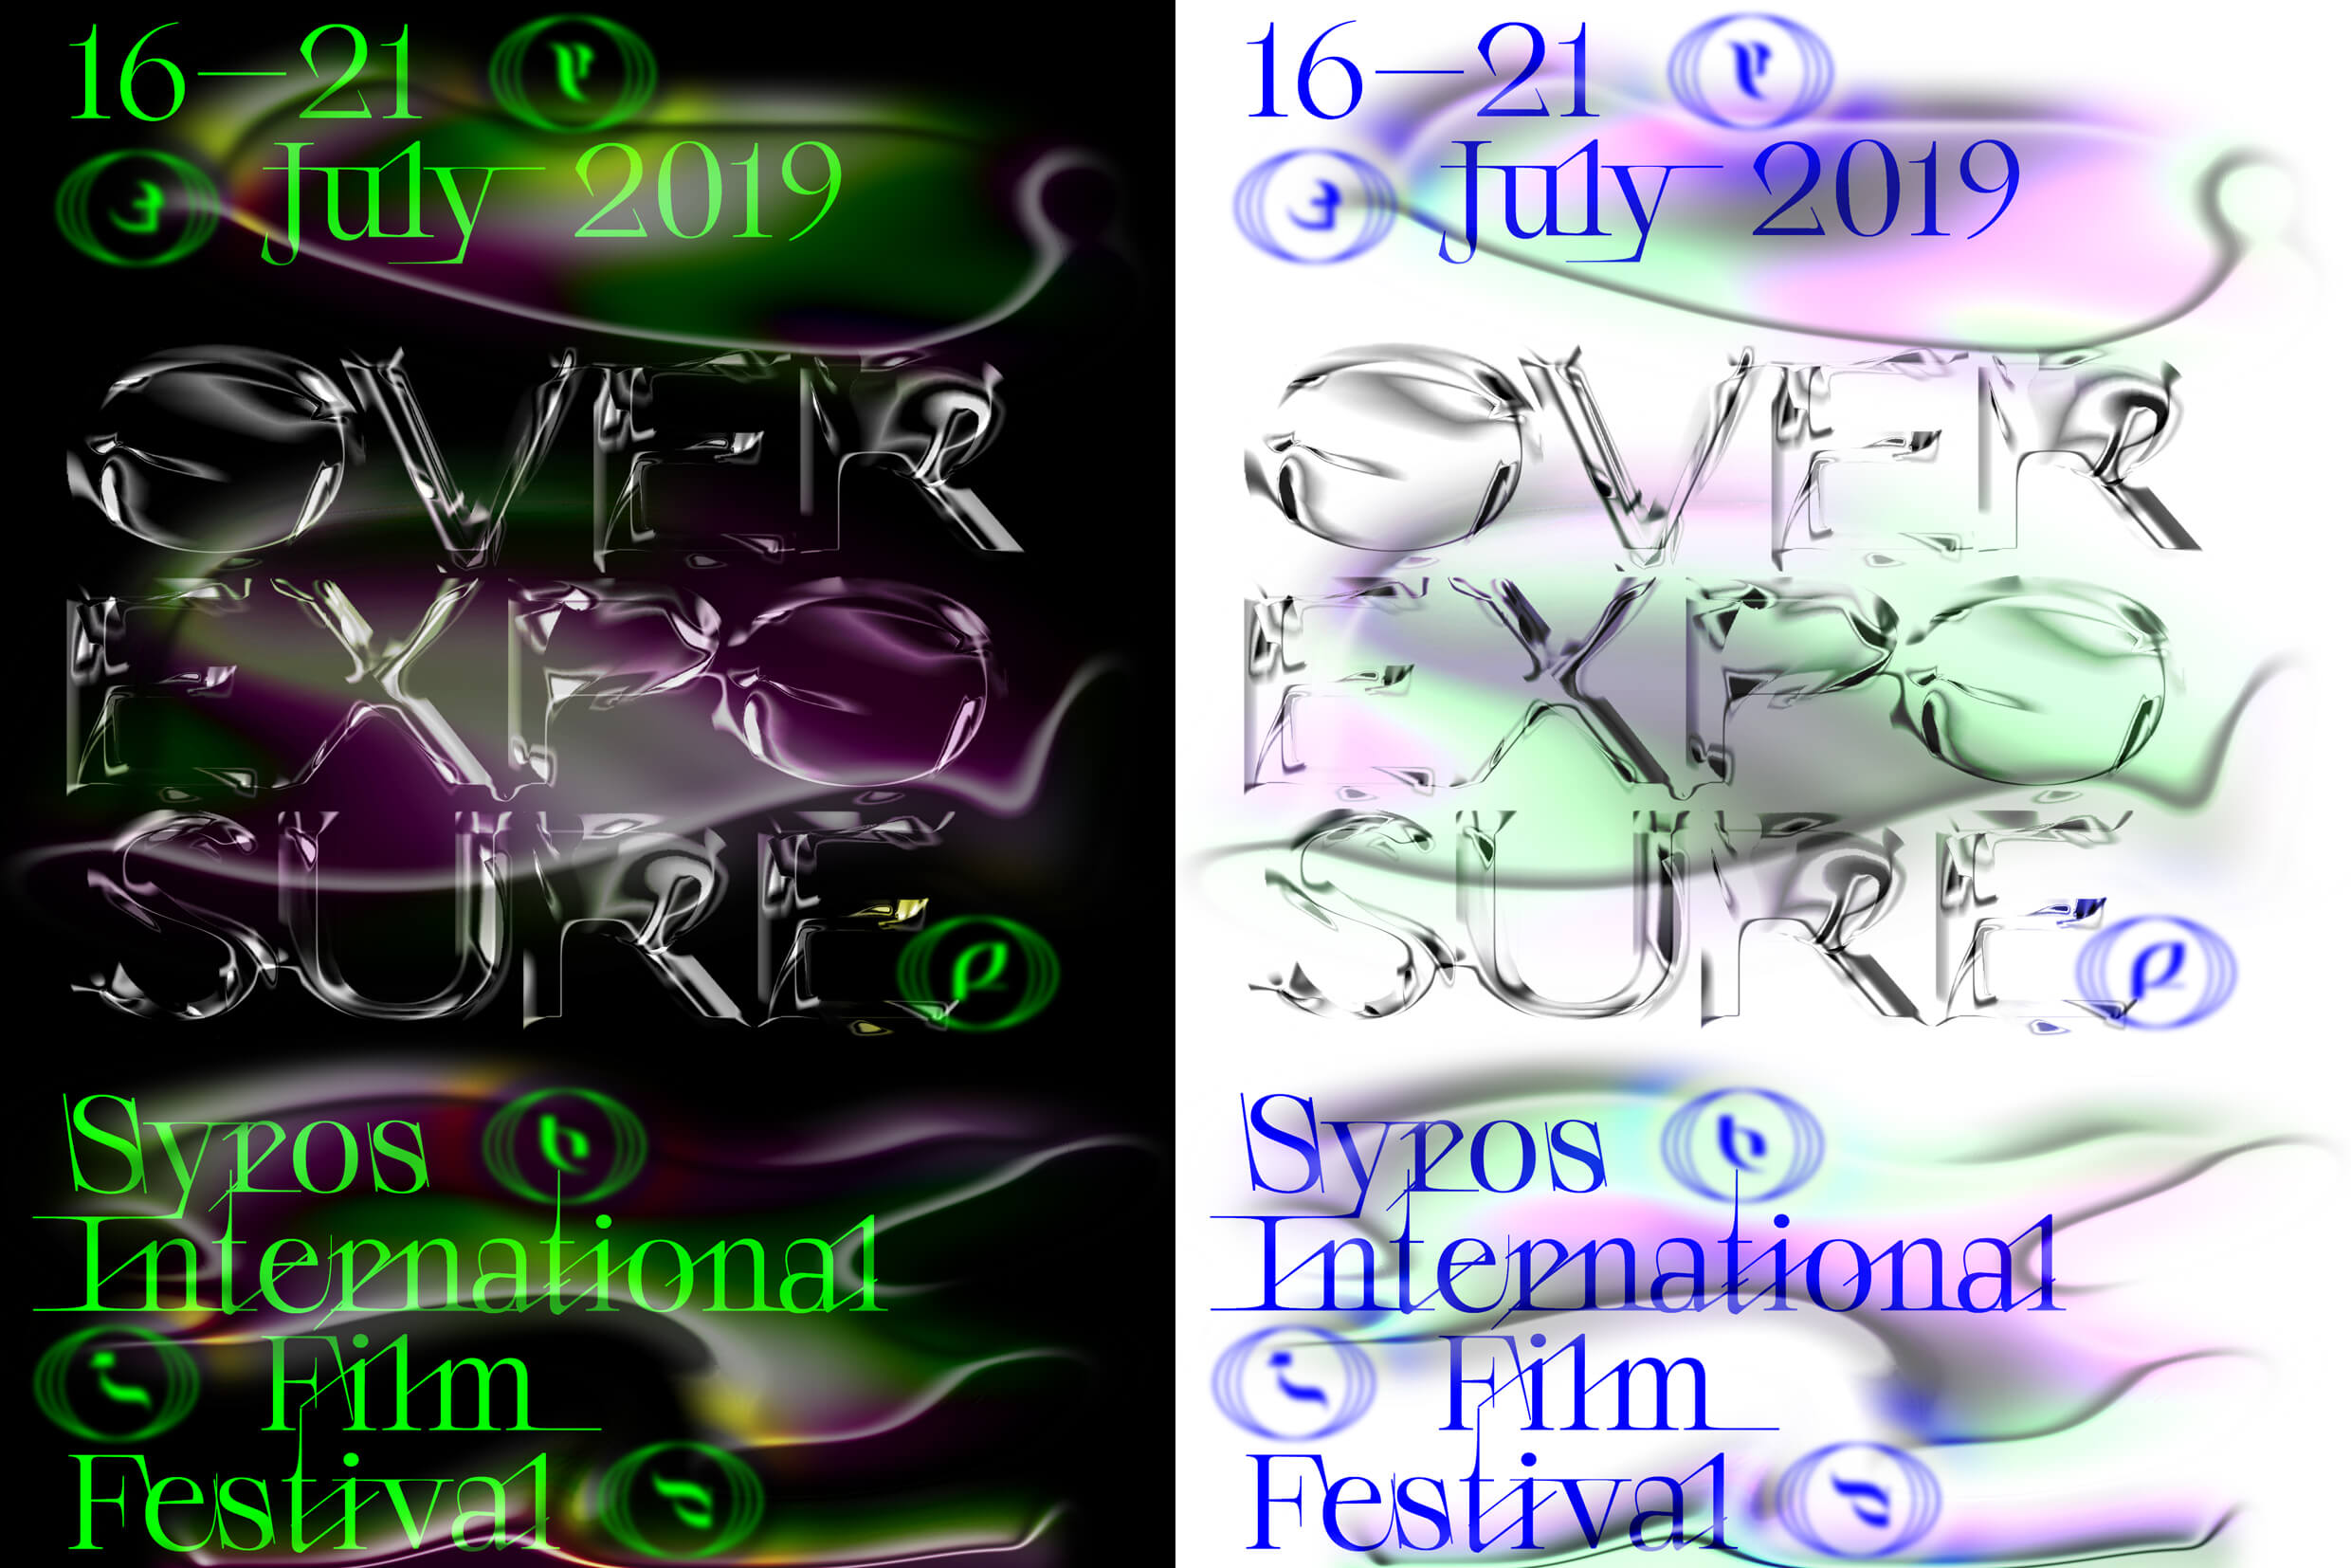 Syros International Film Festival 2019